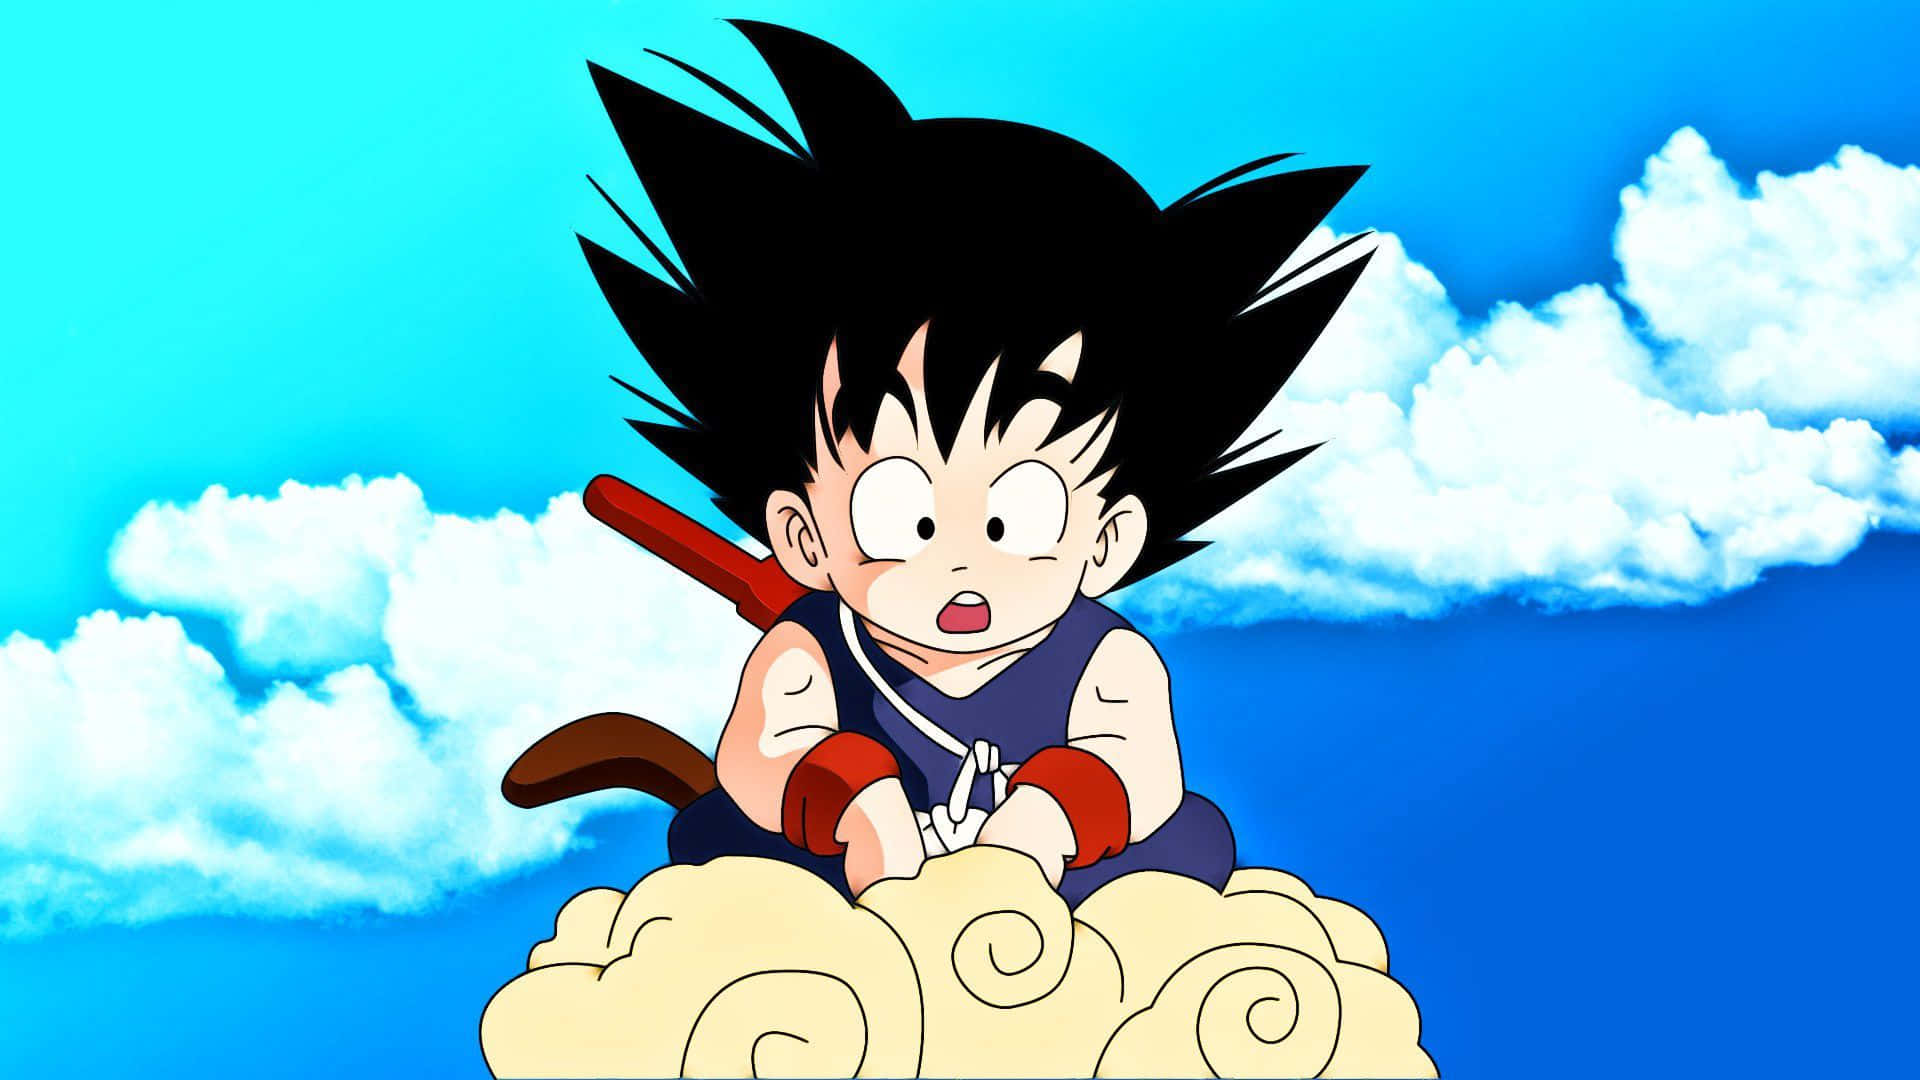 Imagende Goku En Una Nube